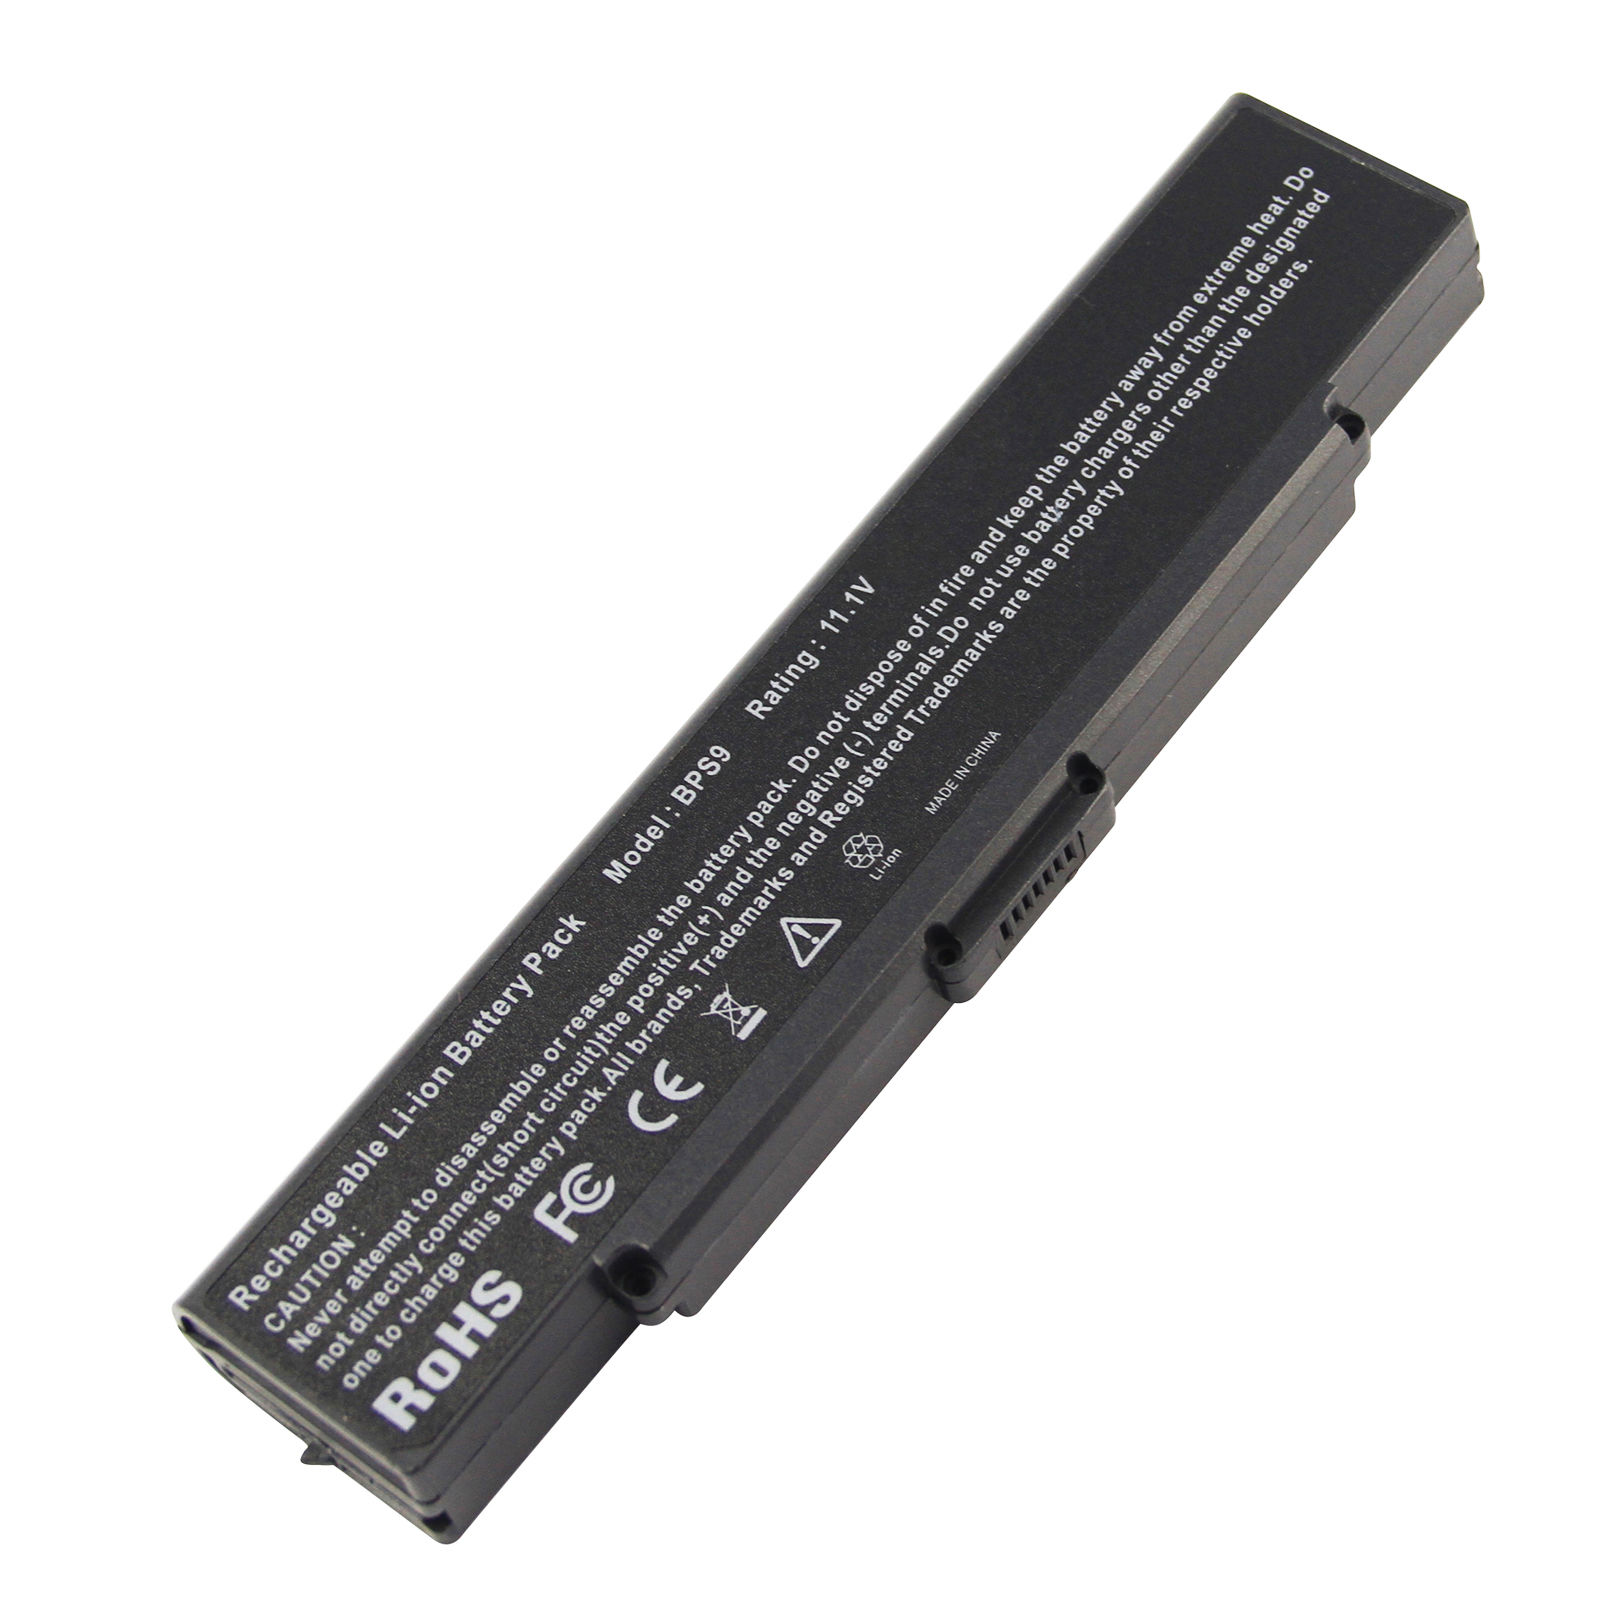 Baterie pro Sony VGP-BPS9, VGP-BPS9A, VGP-BPS9/B, VGP-BPS9/S